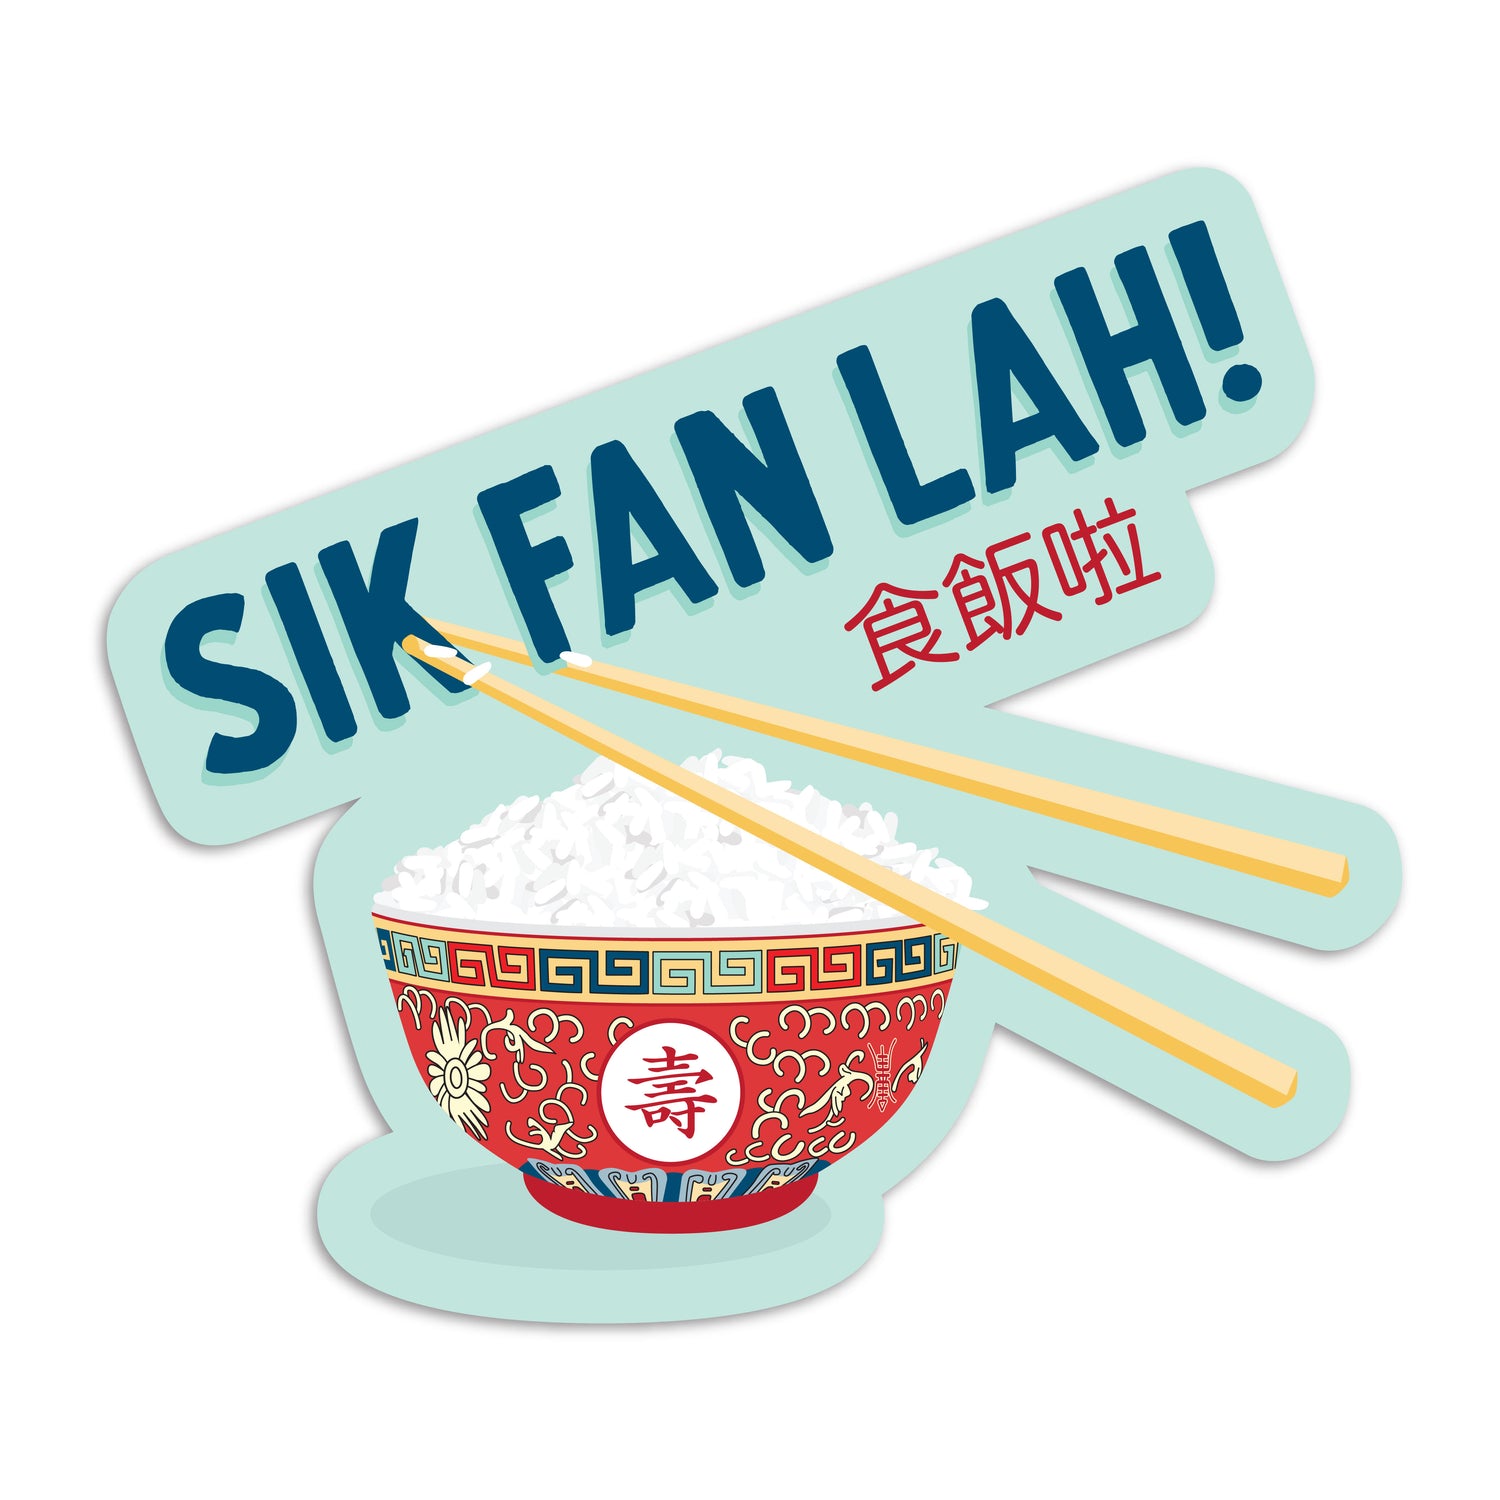 Sik fan lah (食飯啦) rice bowl vinyl sticker by I&